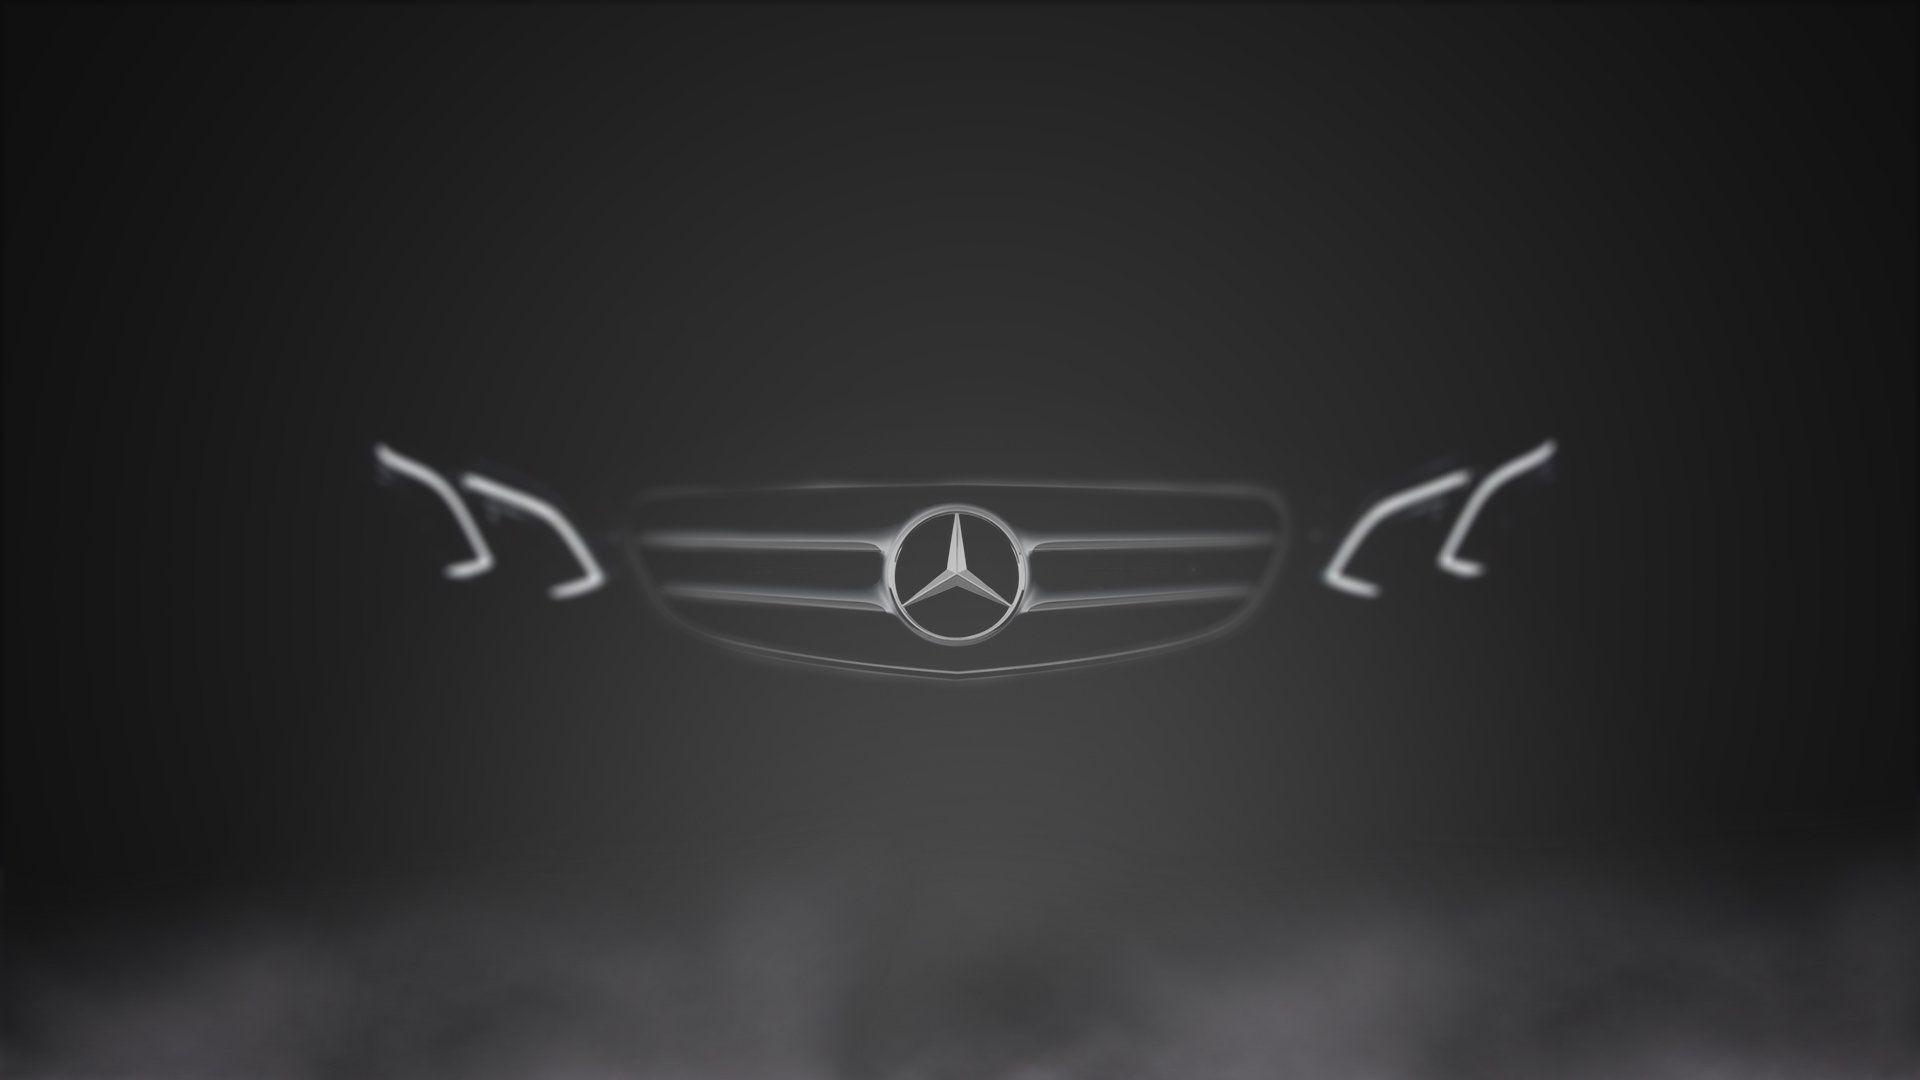 Mercedes Benz Logo Iphone Wallpaper Hd